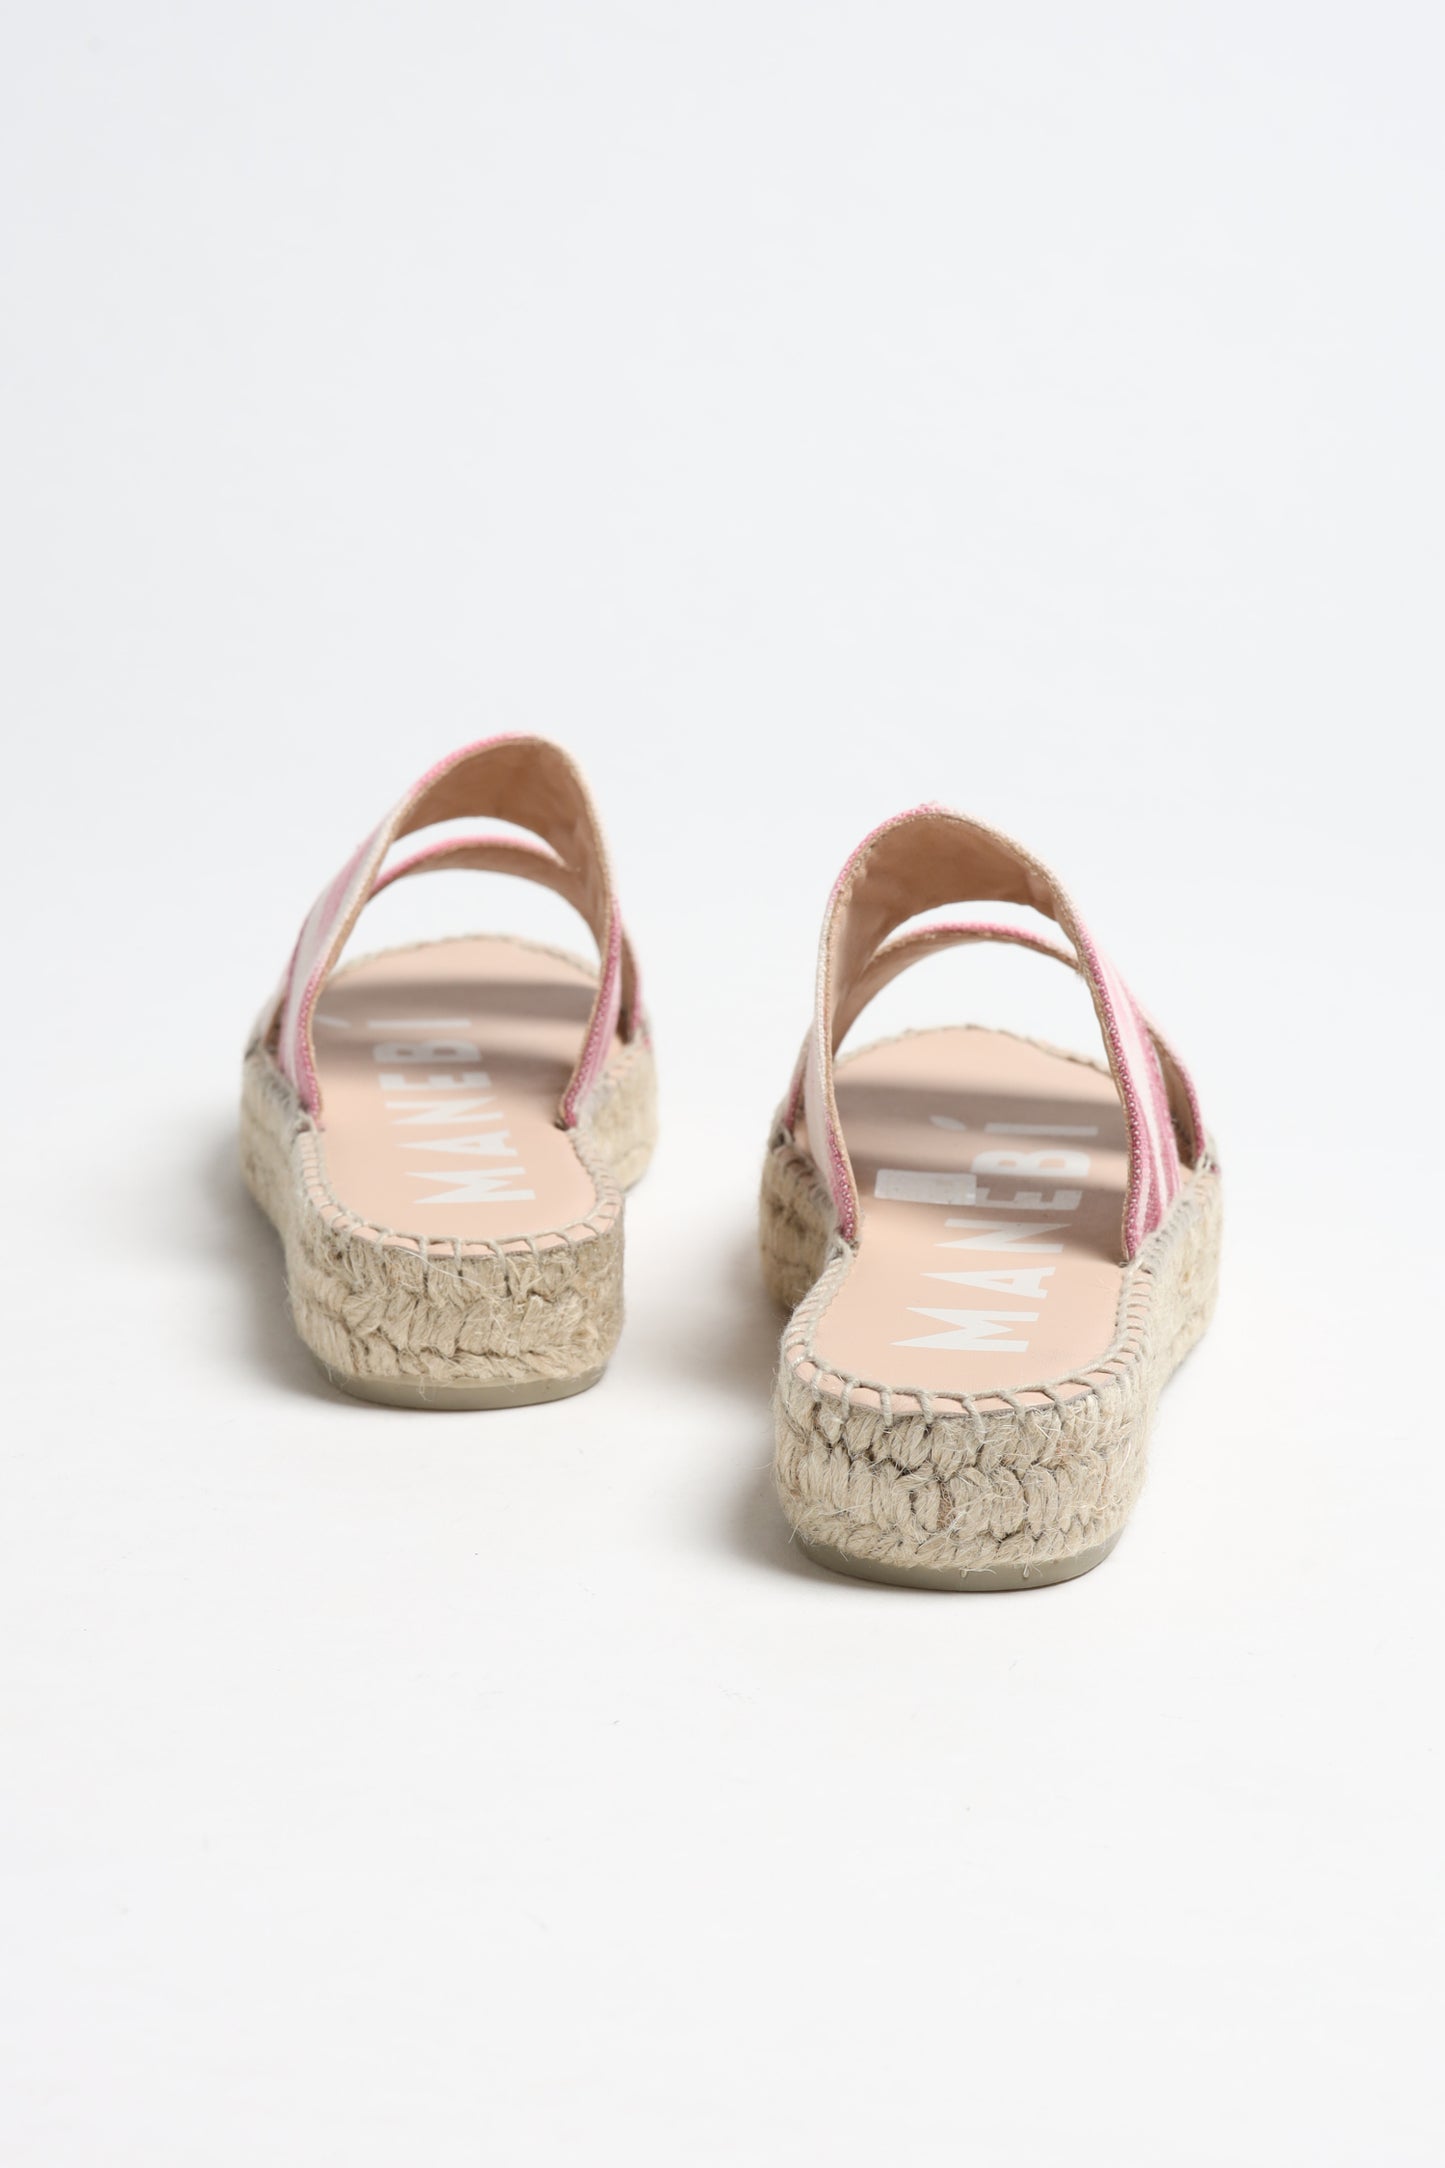 Sandale Tulum in Pink/White IkatManebi - Anita Hass